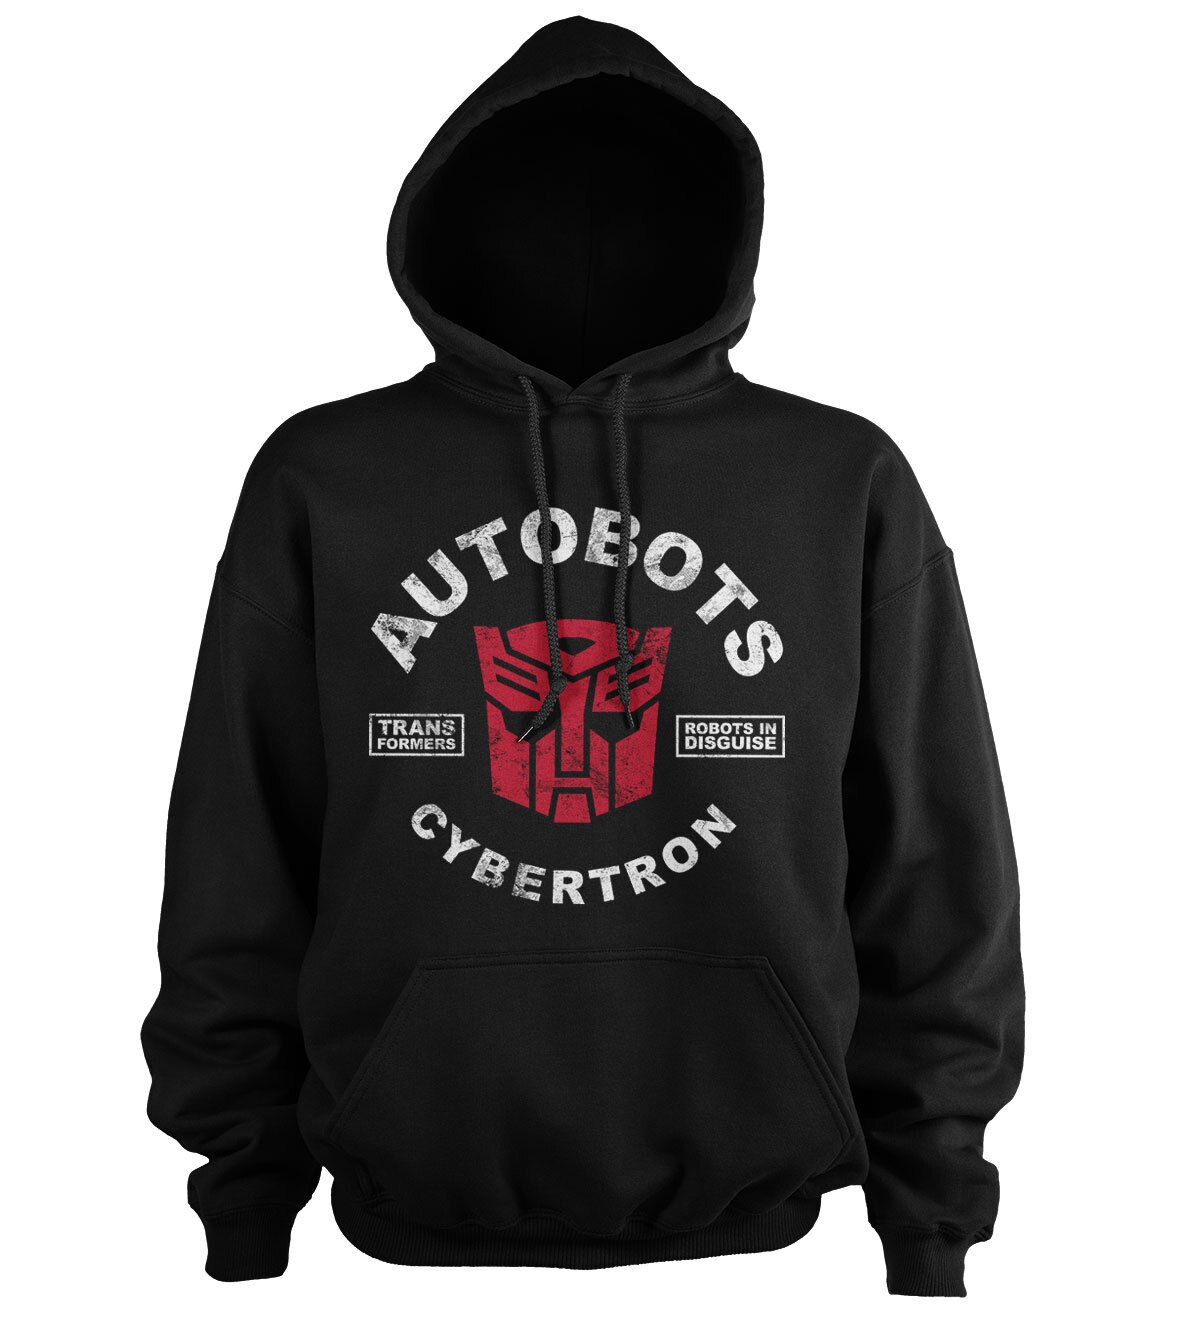 Autobots Cybertron Hoodie